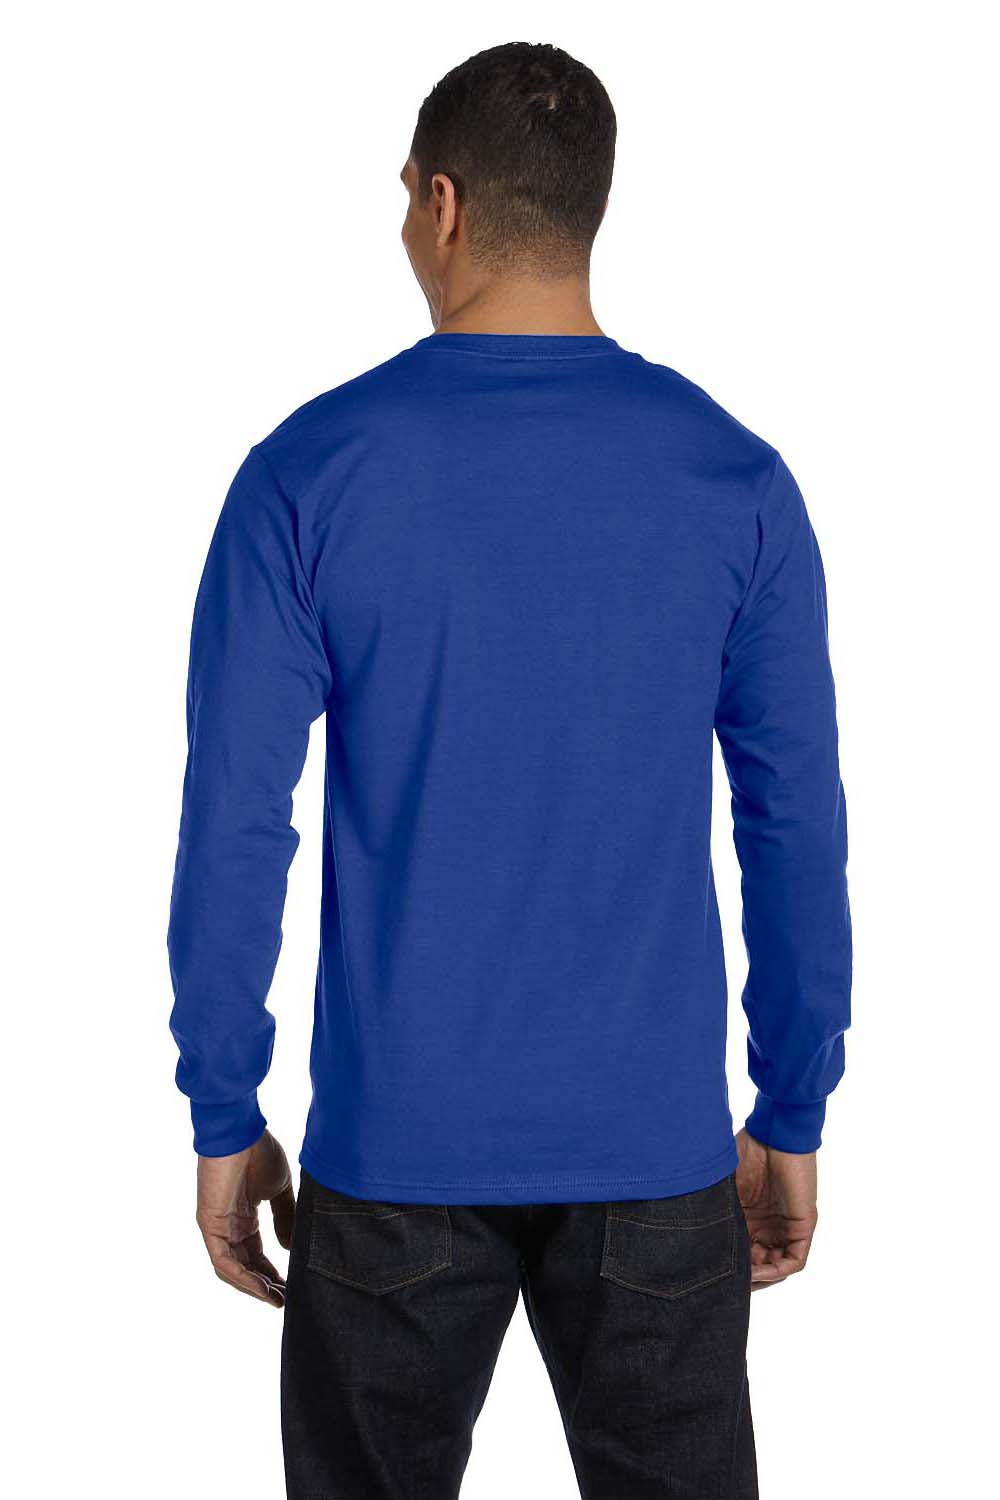 Hanes 5186 Mens Beefy-T Long Sleeve Crewneck T-Shirt Royal Blue Back